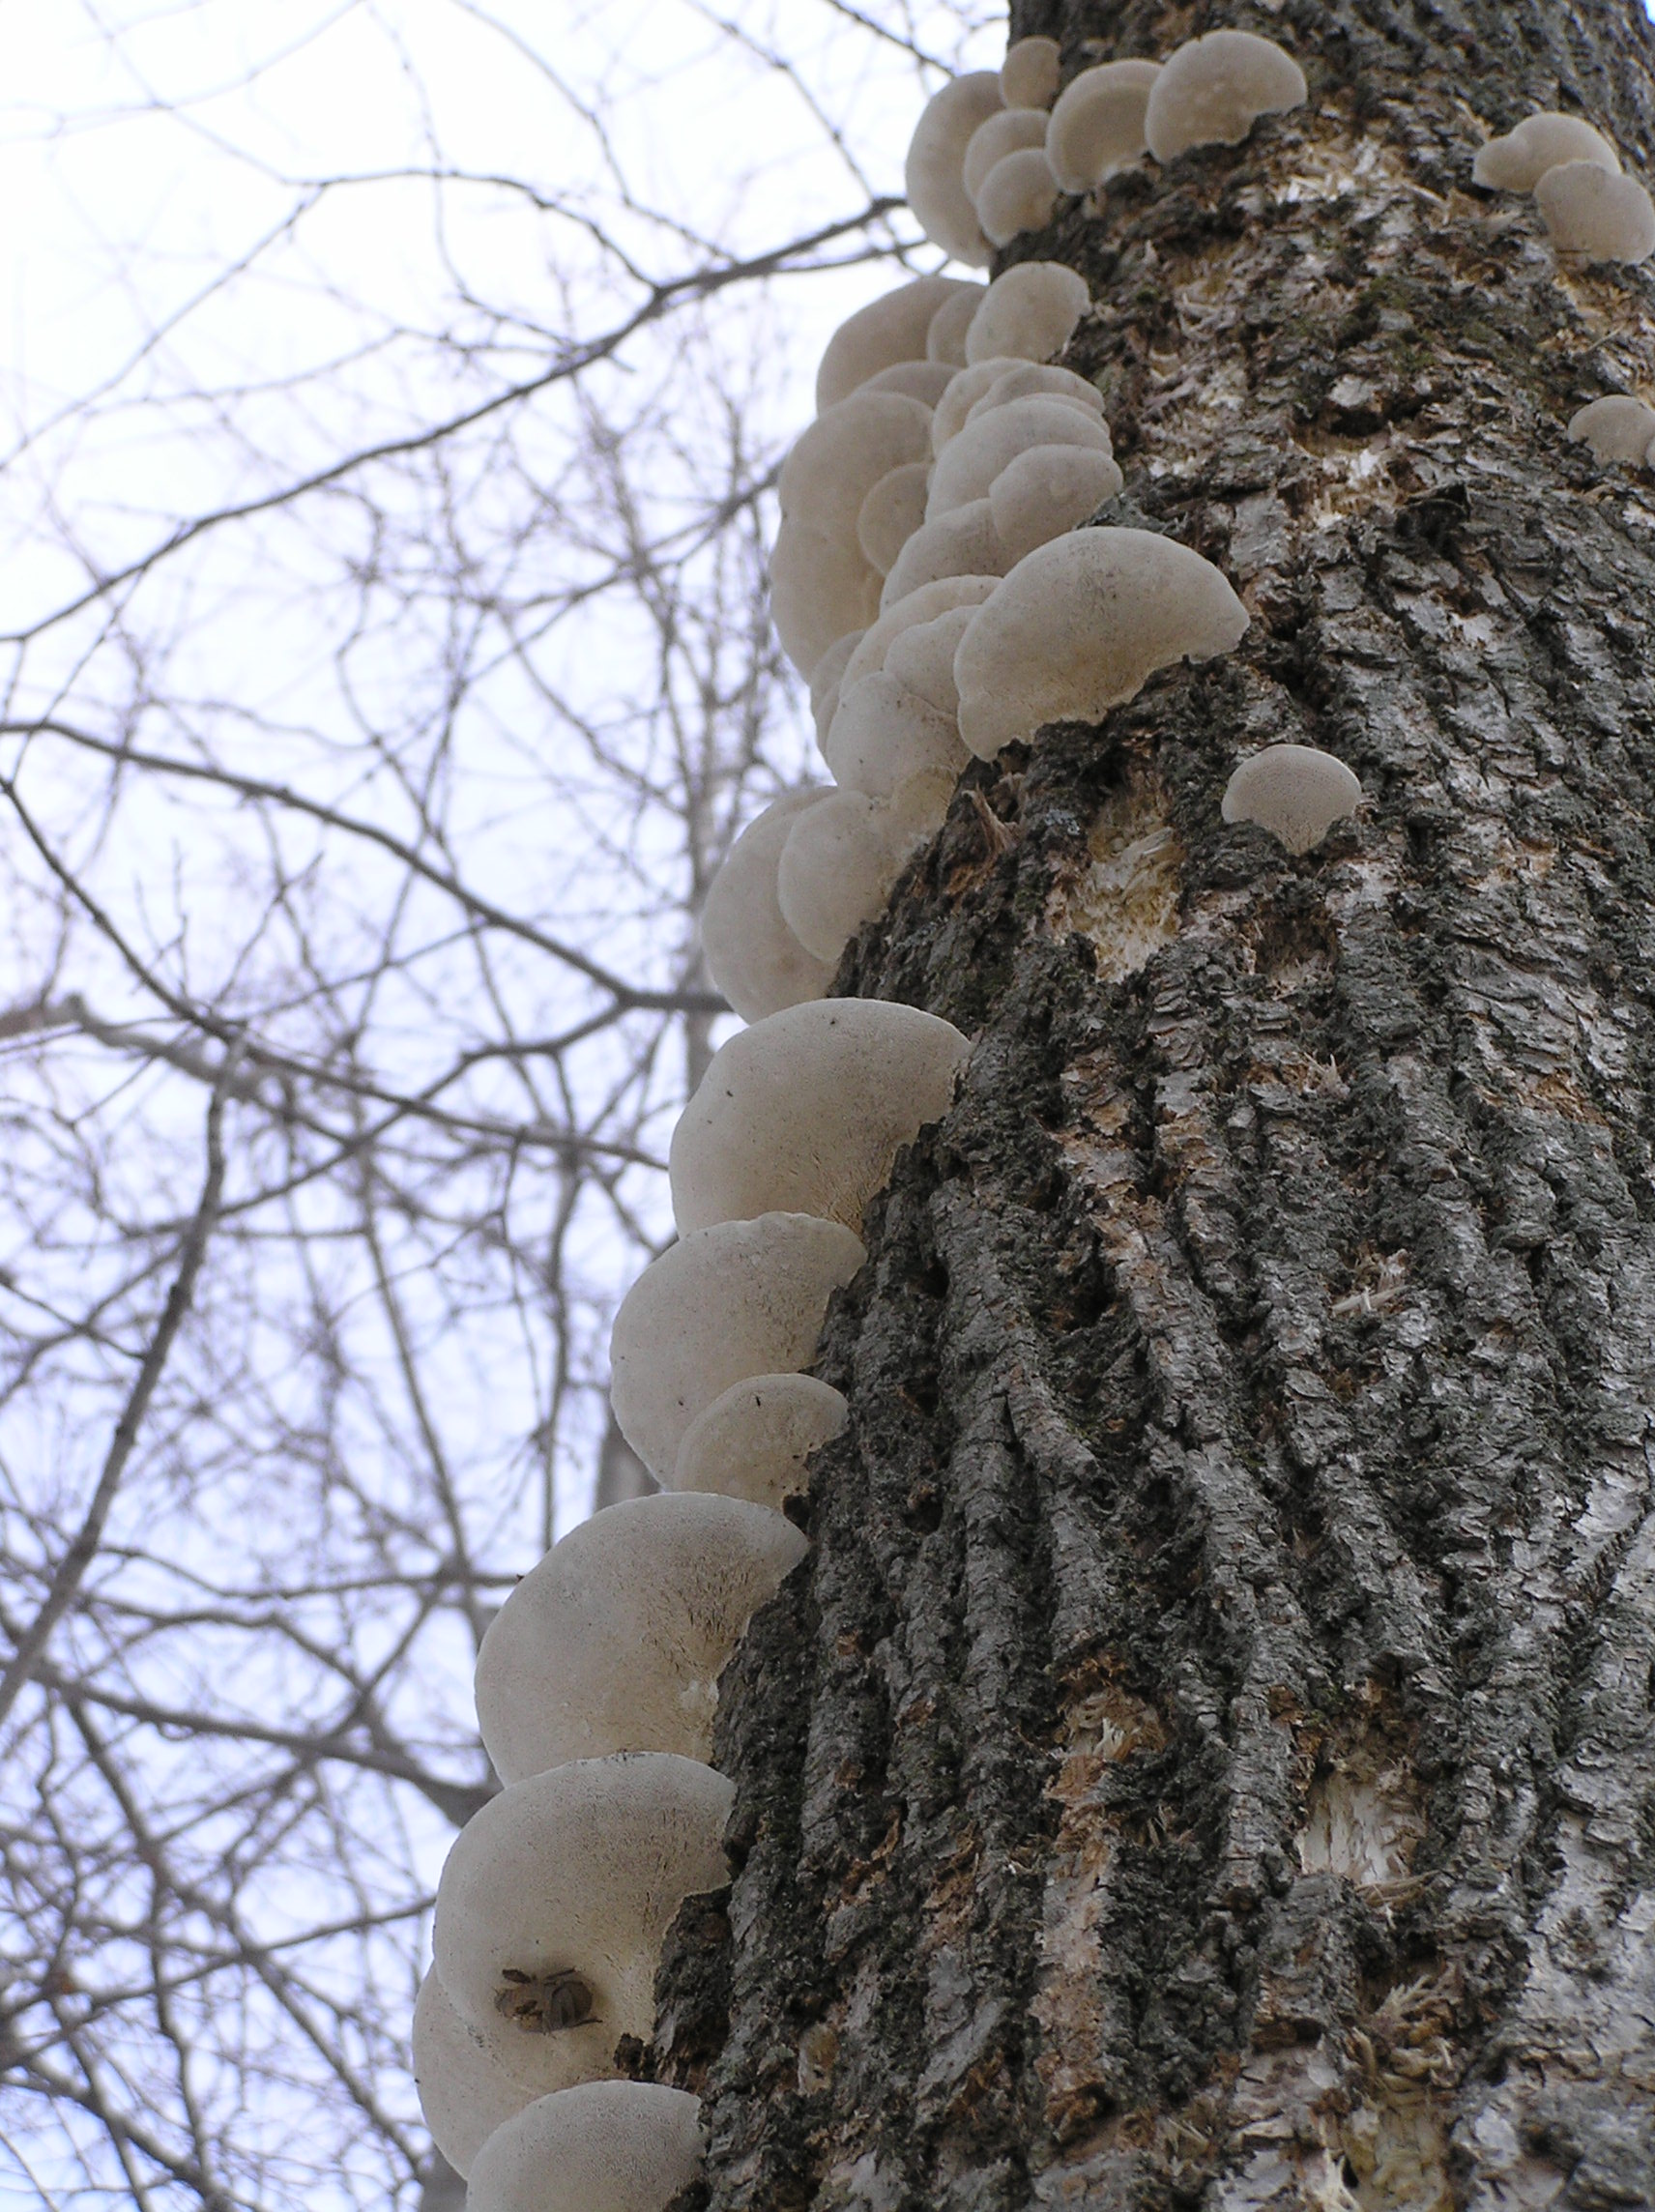 Tree Fungus | Pics4Learning